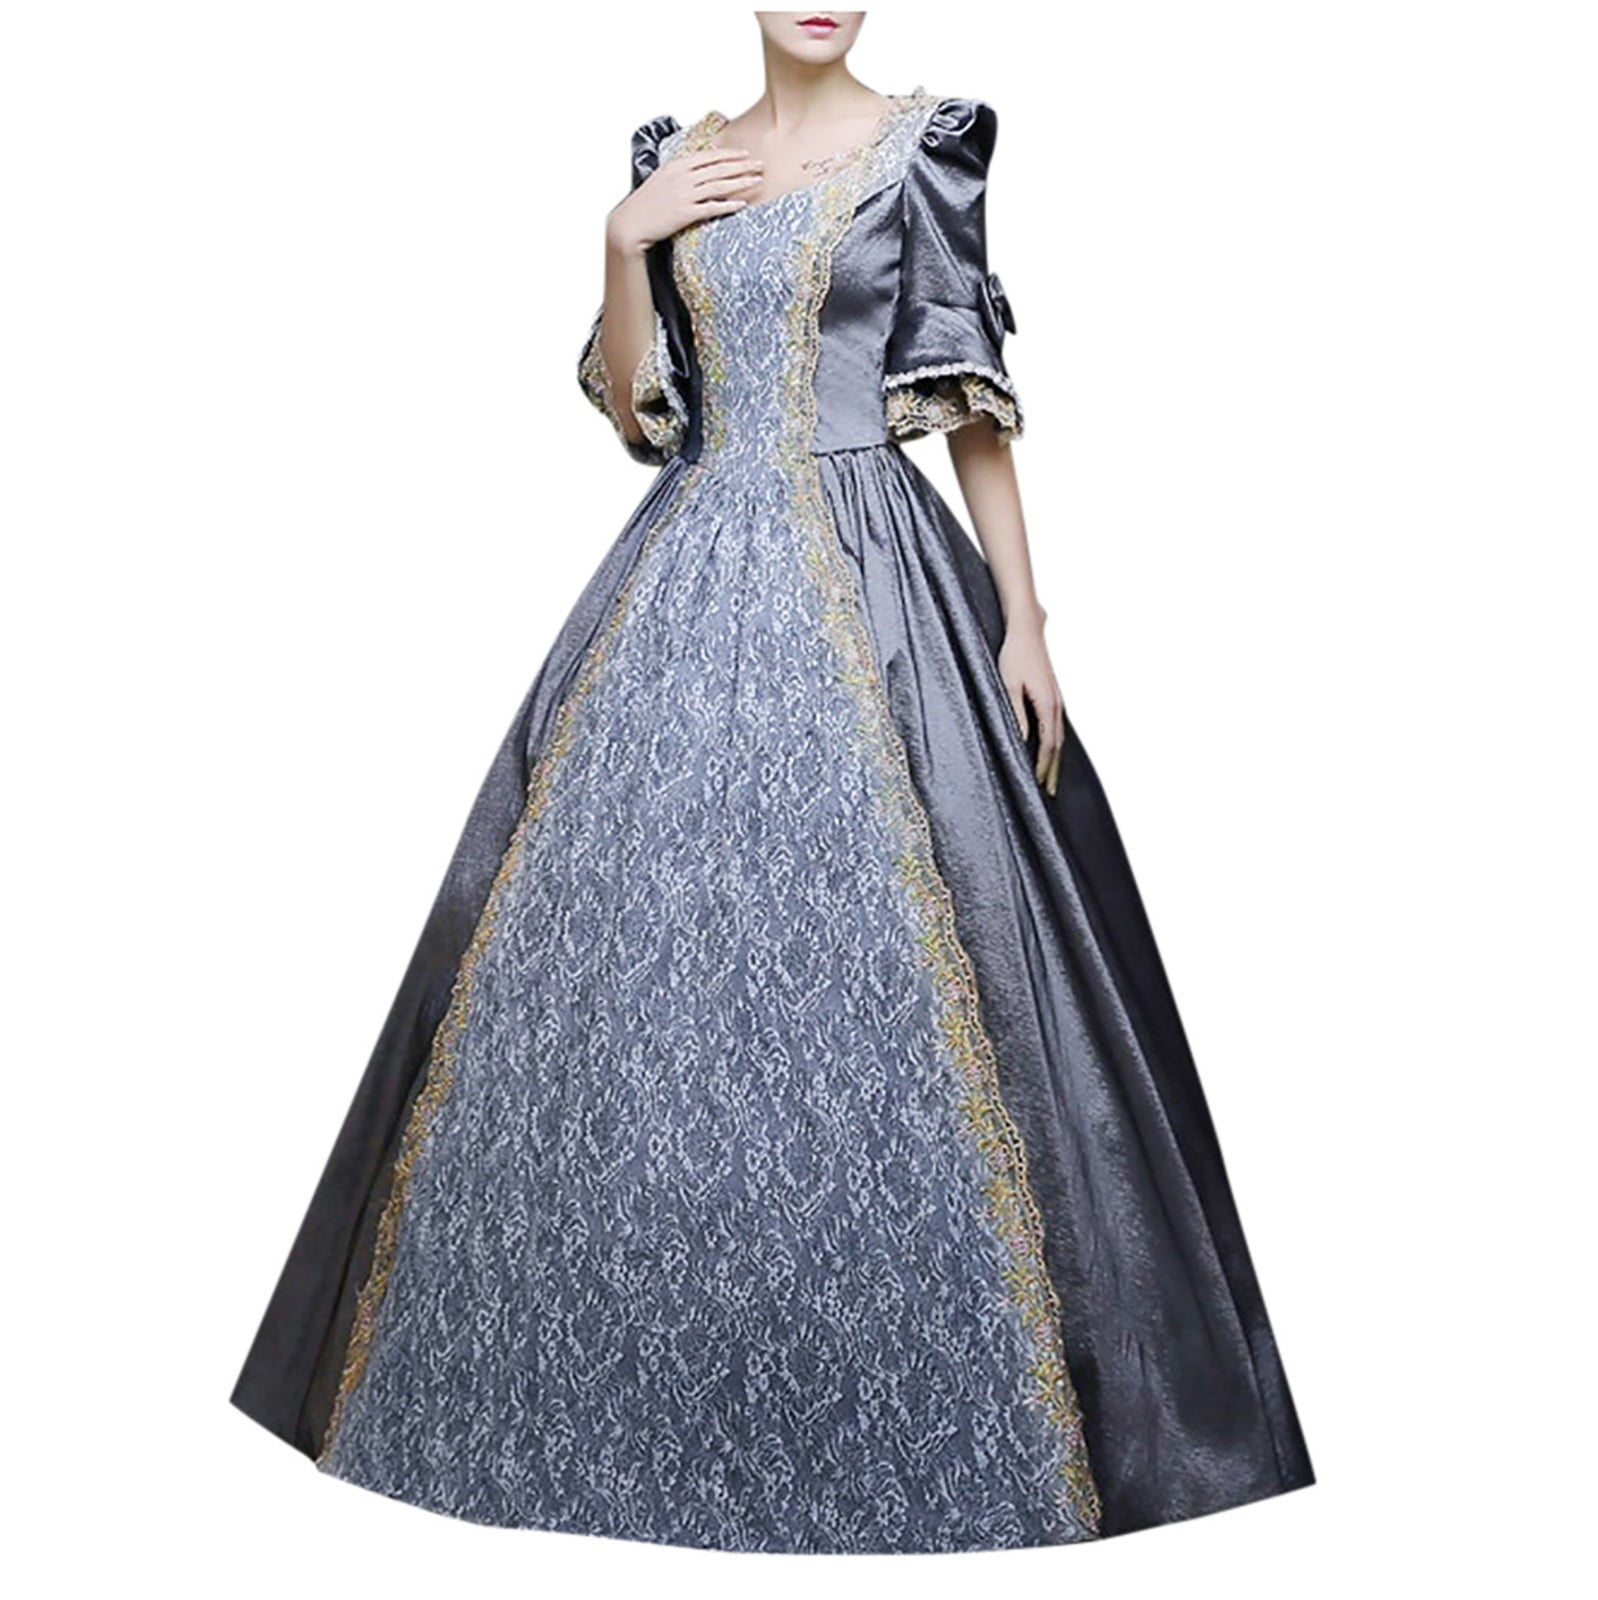 Victorian Era Marie Antoinette Ball Dresses 18th Century Costume  Renaissance Historical Period Dresses For Women - Dresses - AliExpress